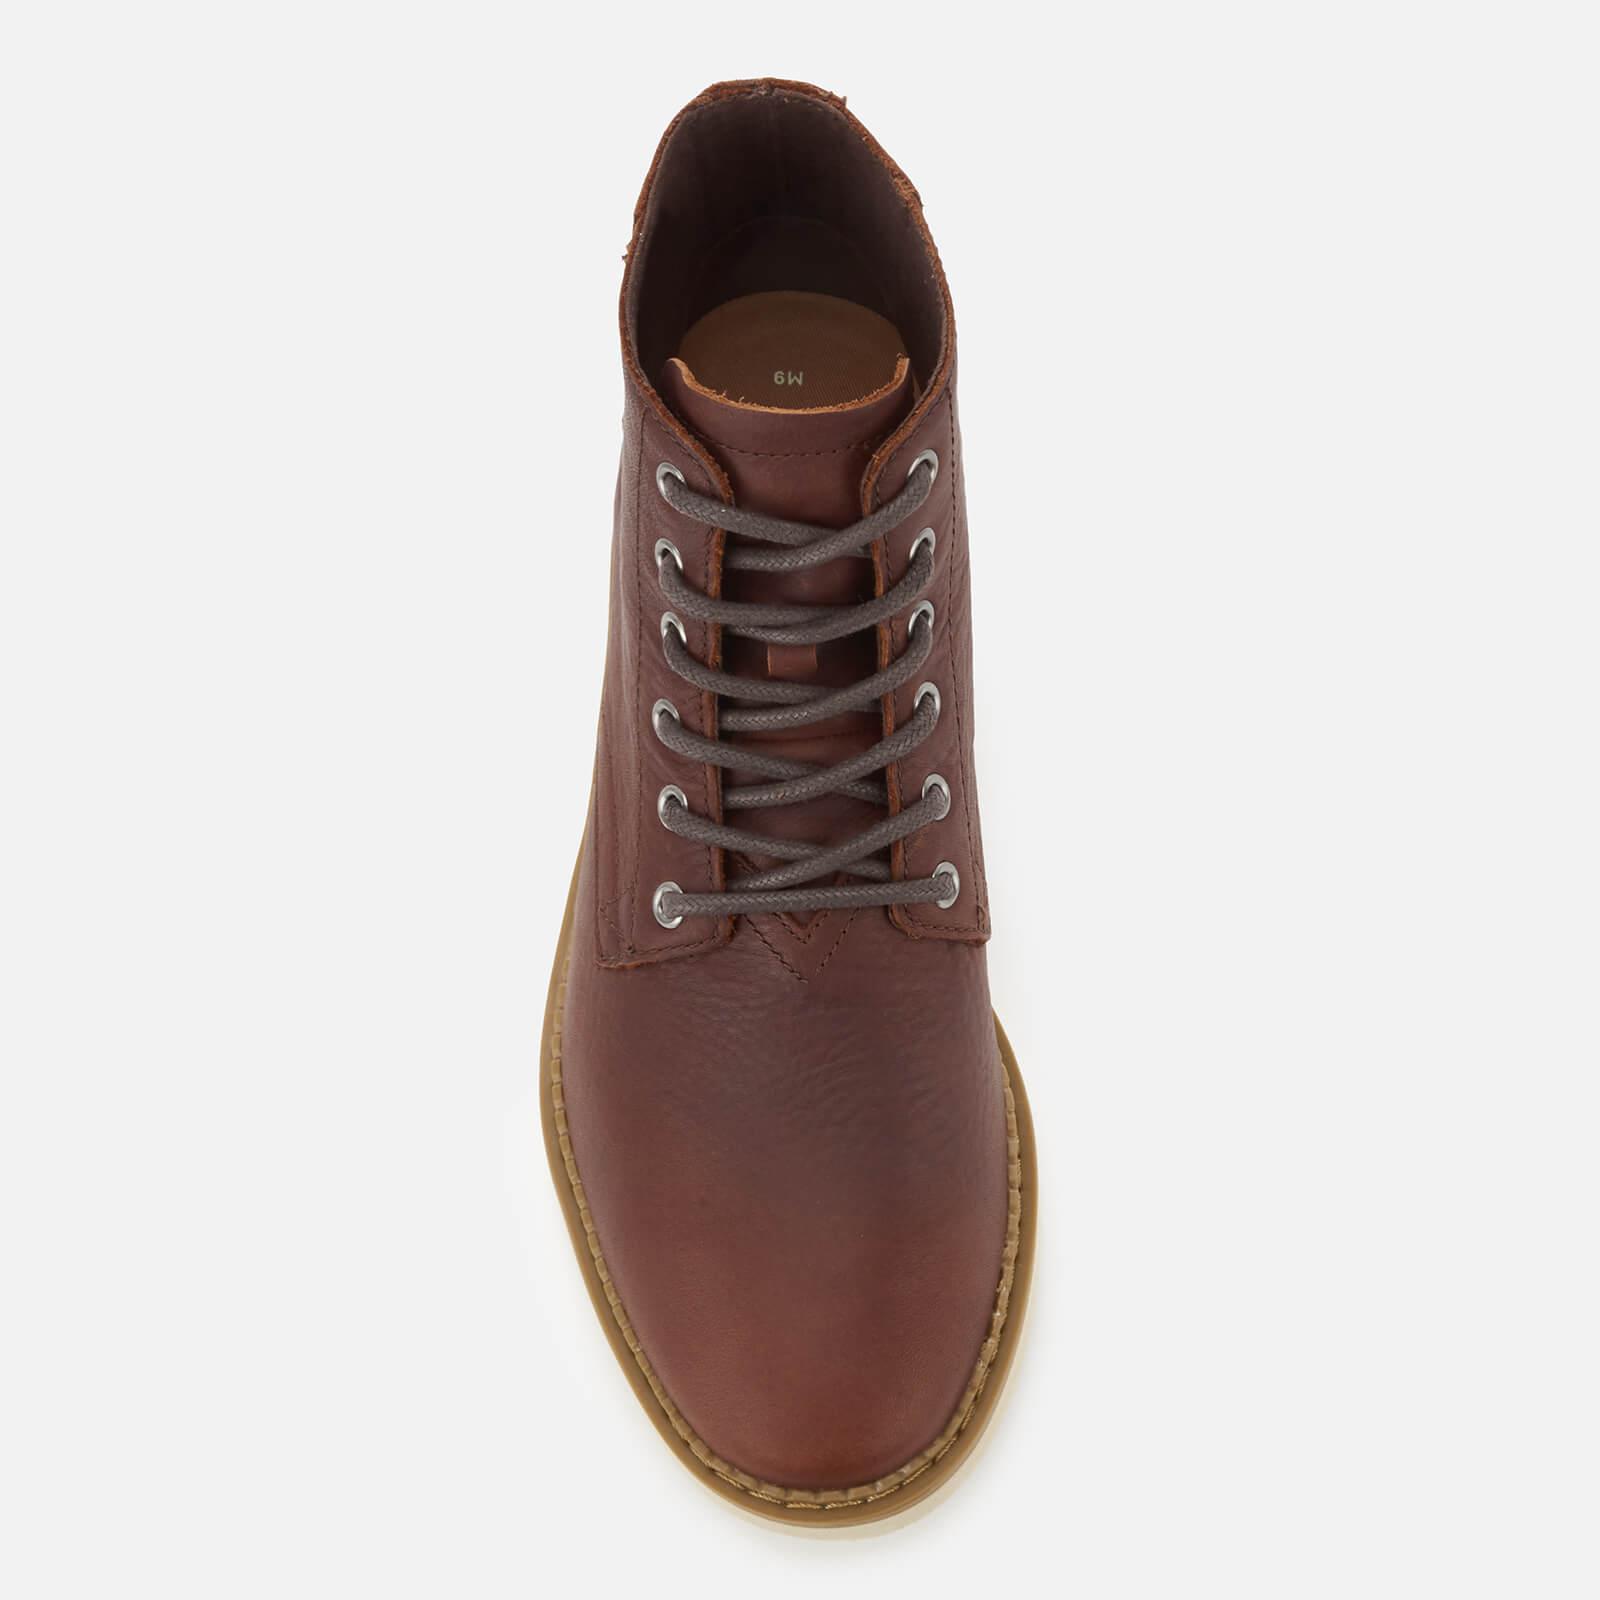 toms water resistant dark brown leather men's porter boots